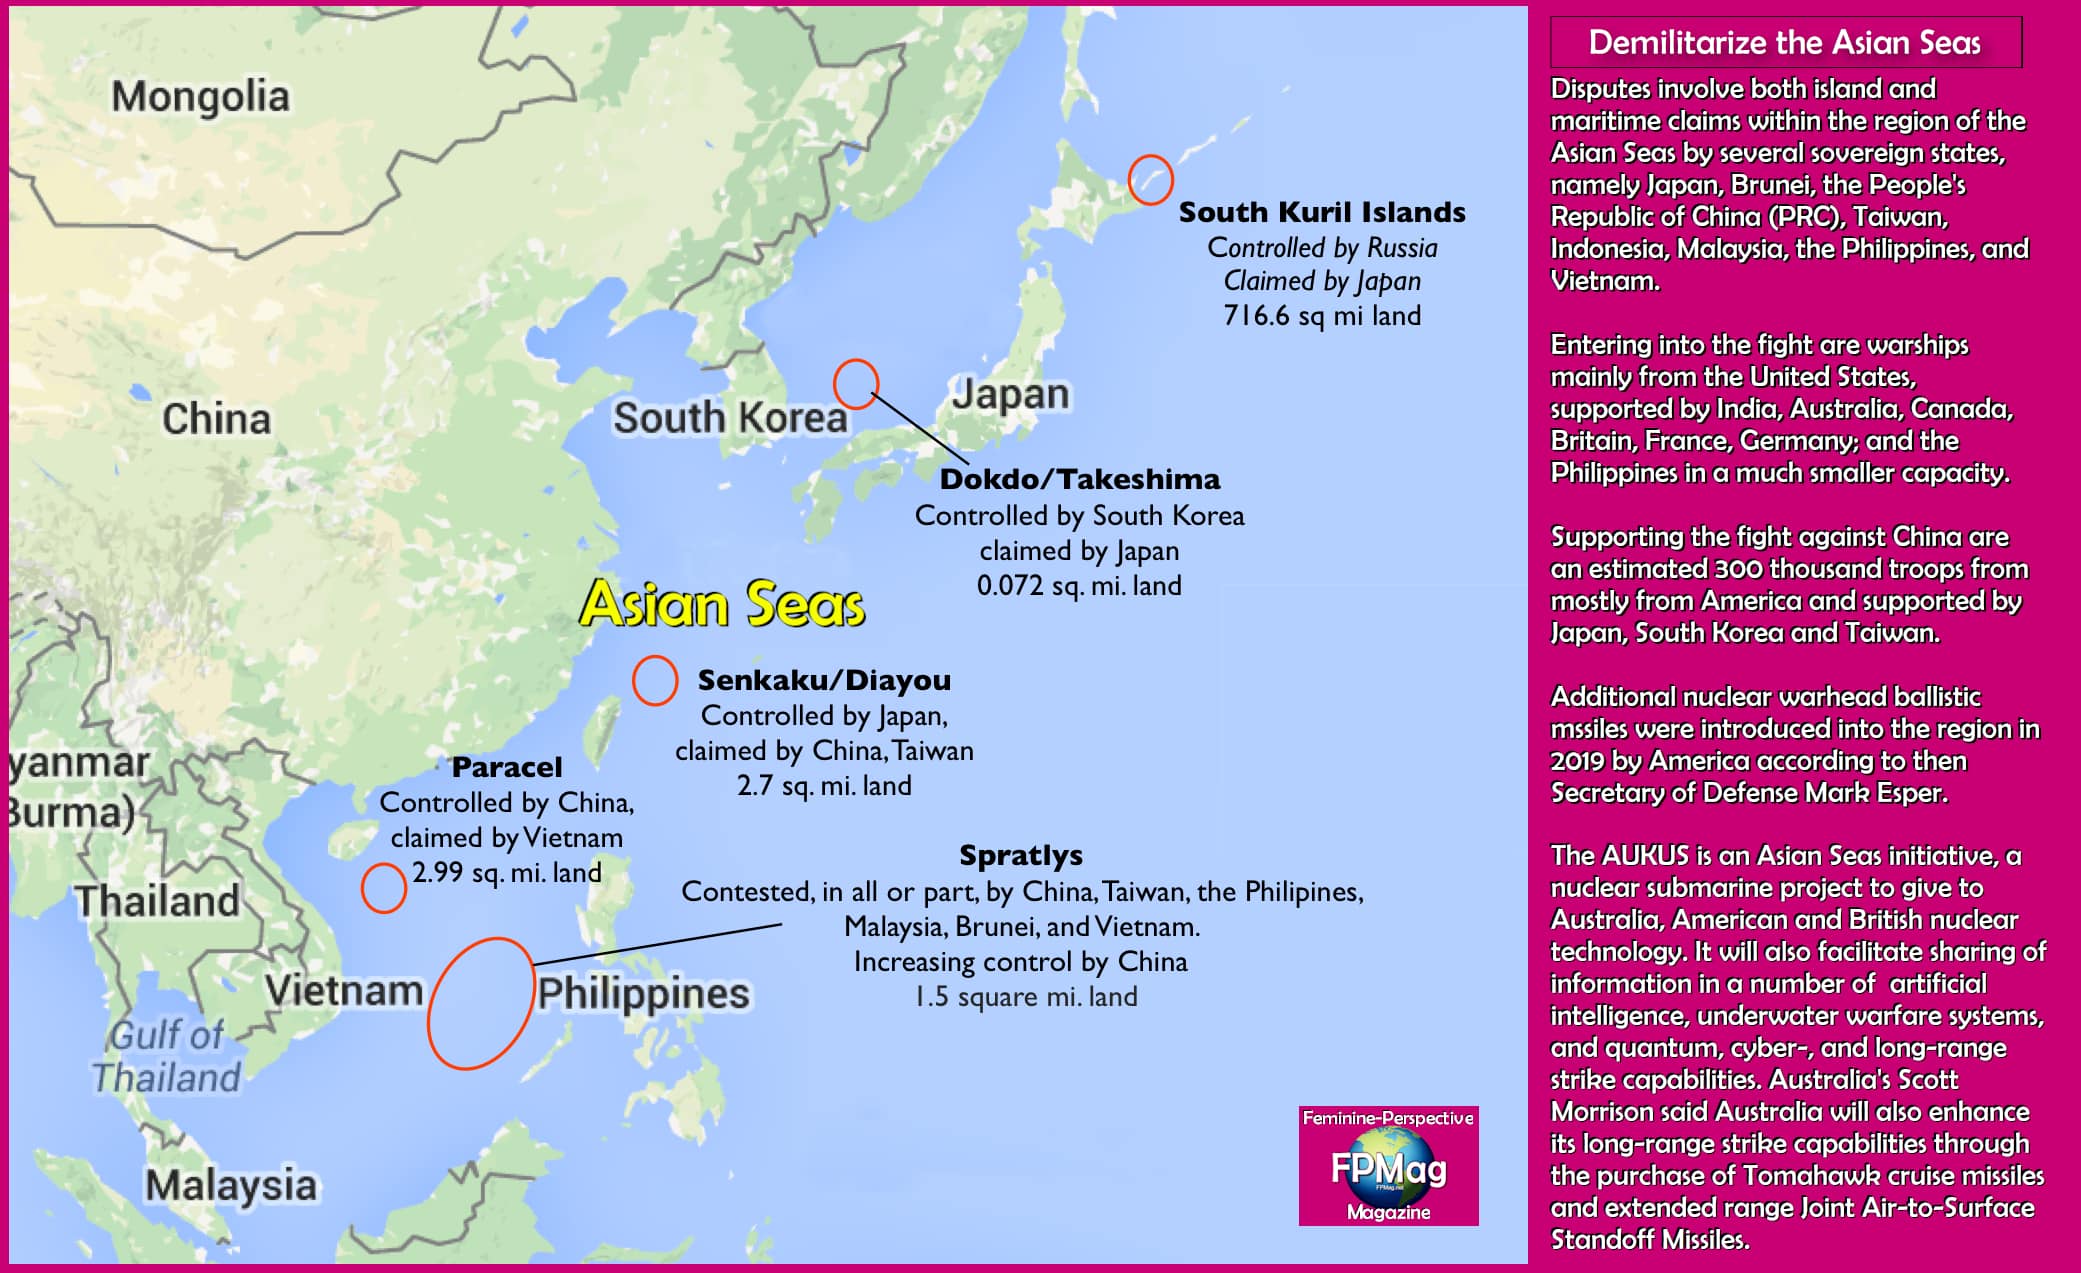 Demilitarize the Asian Seas